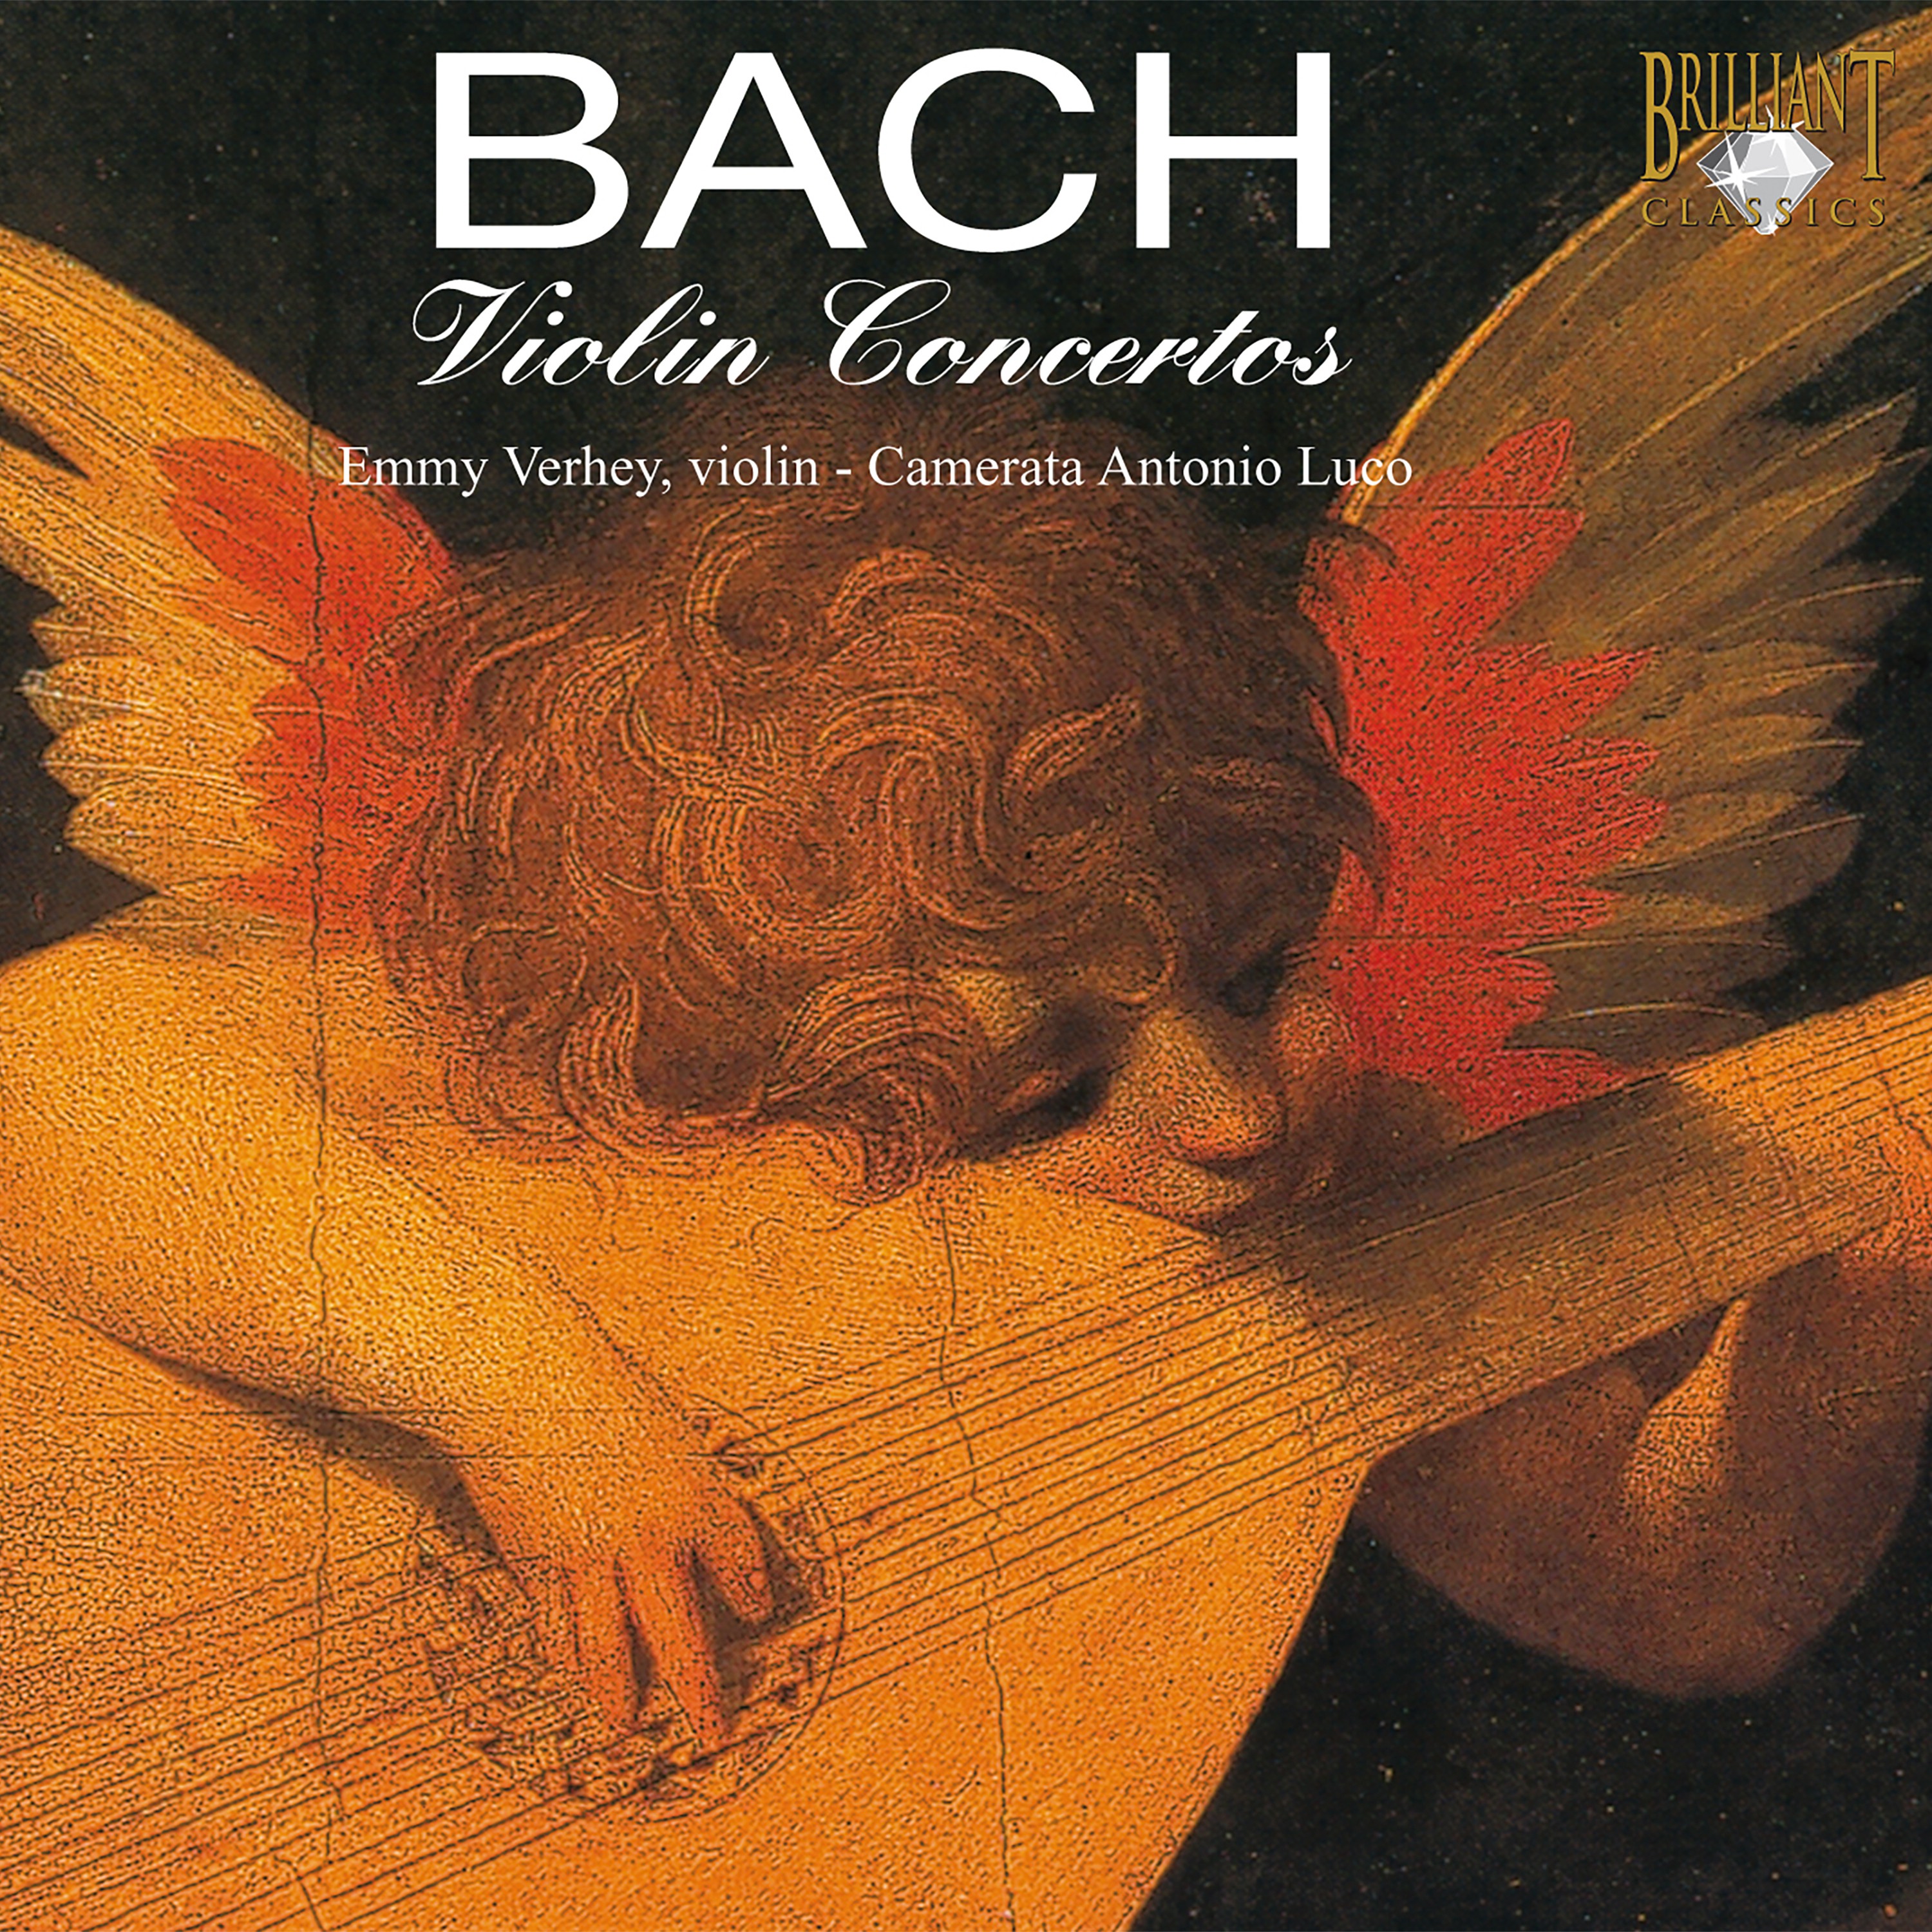 Violin Concerto in G Minor, BWV 1056: Allegro